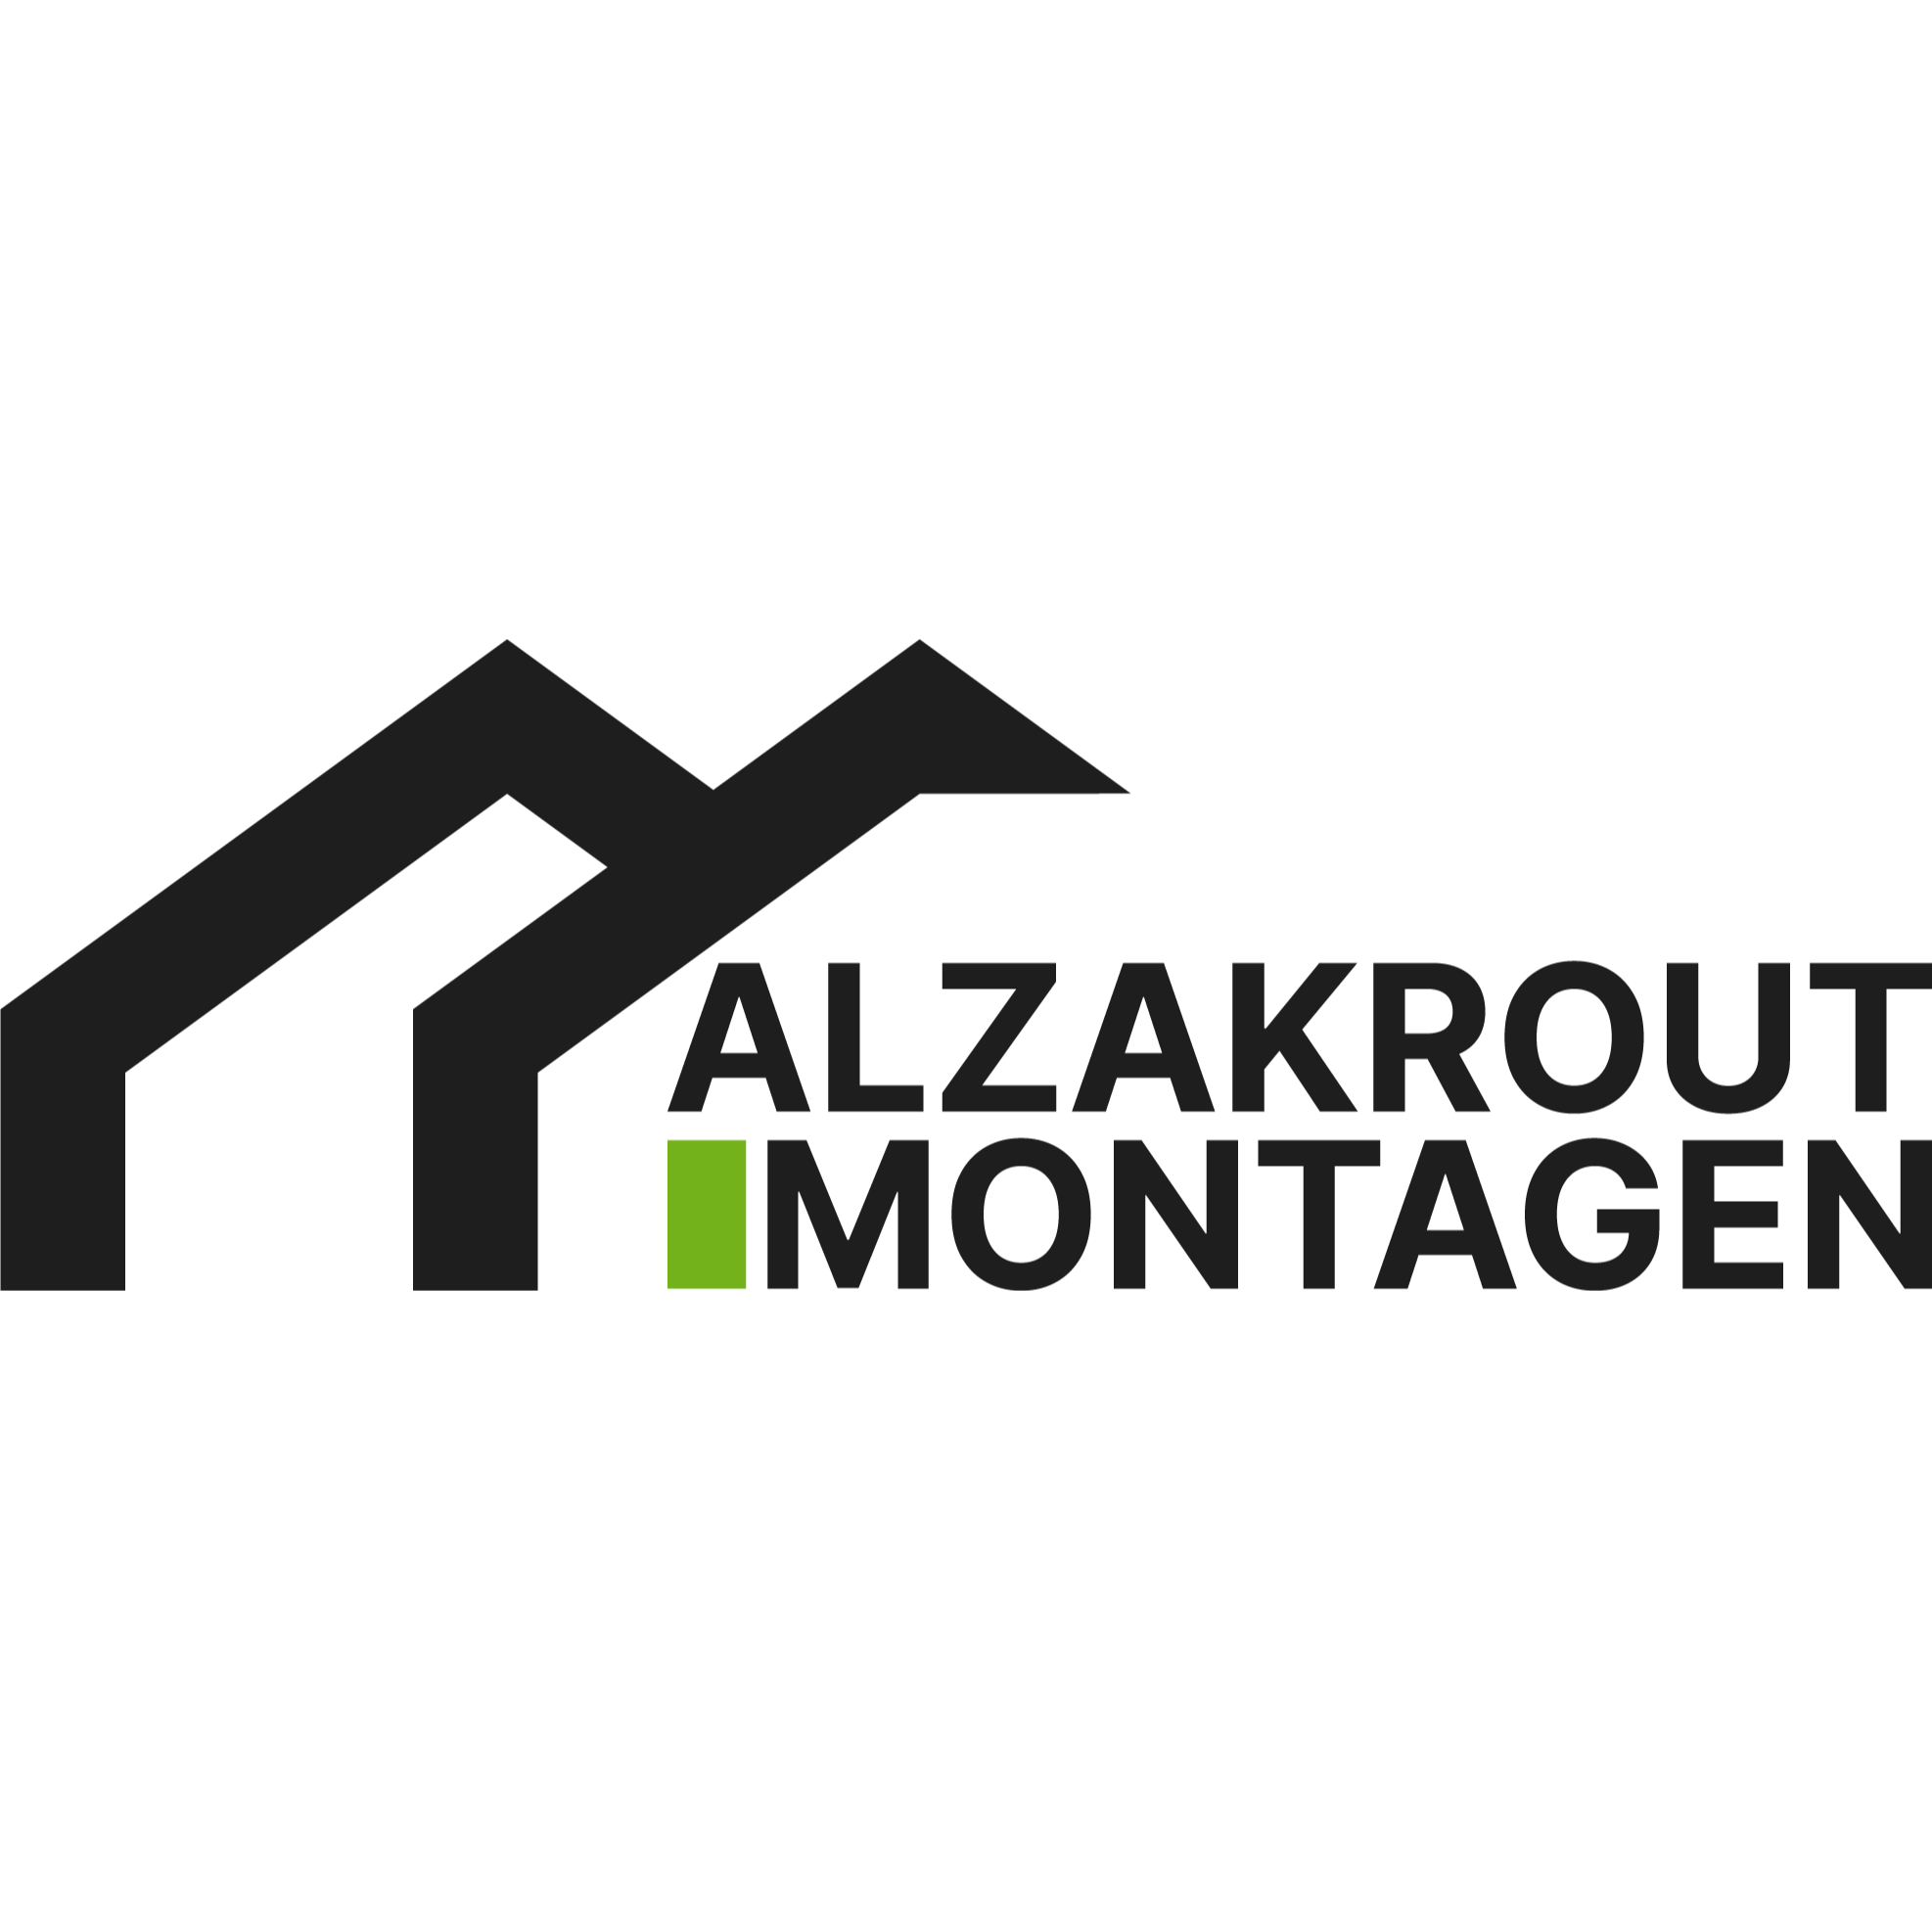 Alzakrout Montagen & Zaunbau in Gießen - Logo